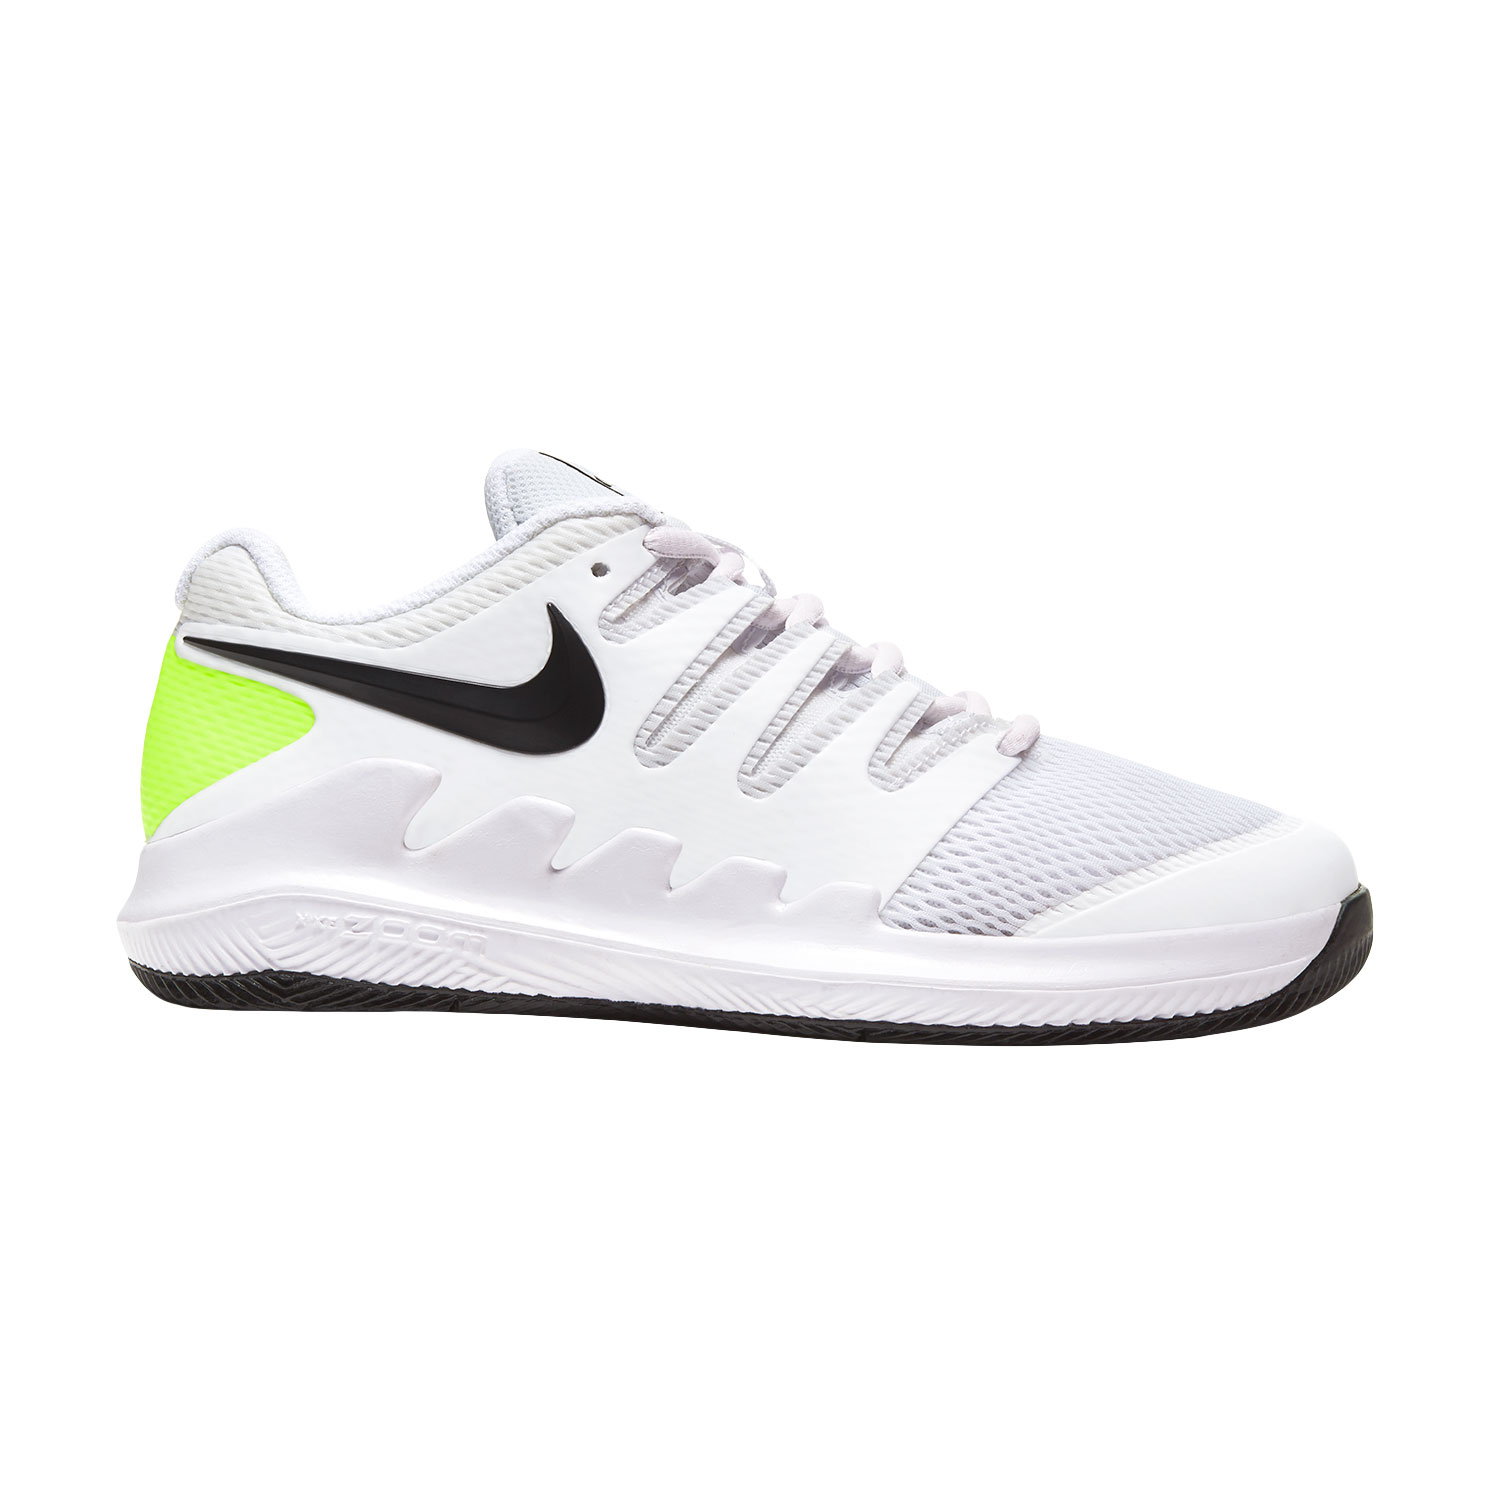 Nike Vapor X Scarpe da Tennis Bambini - White/Black/Volt